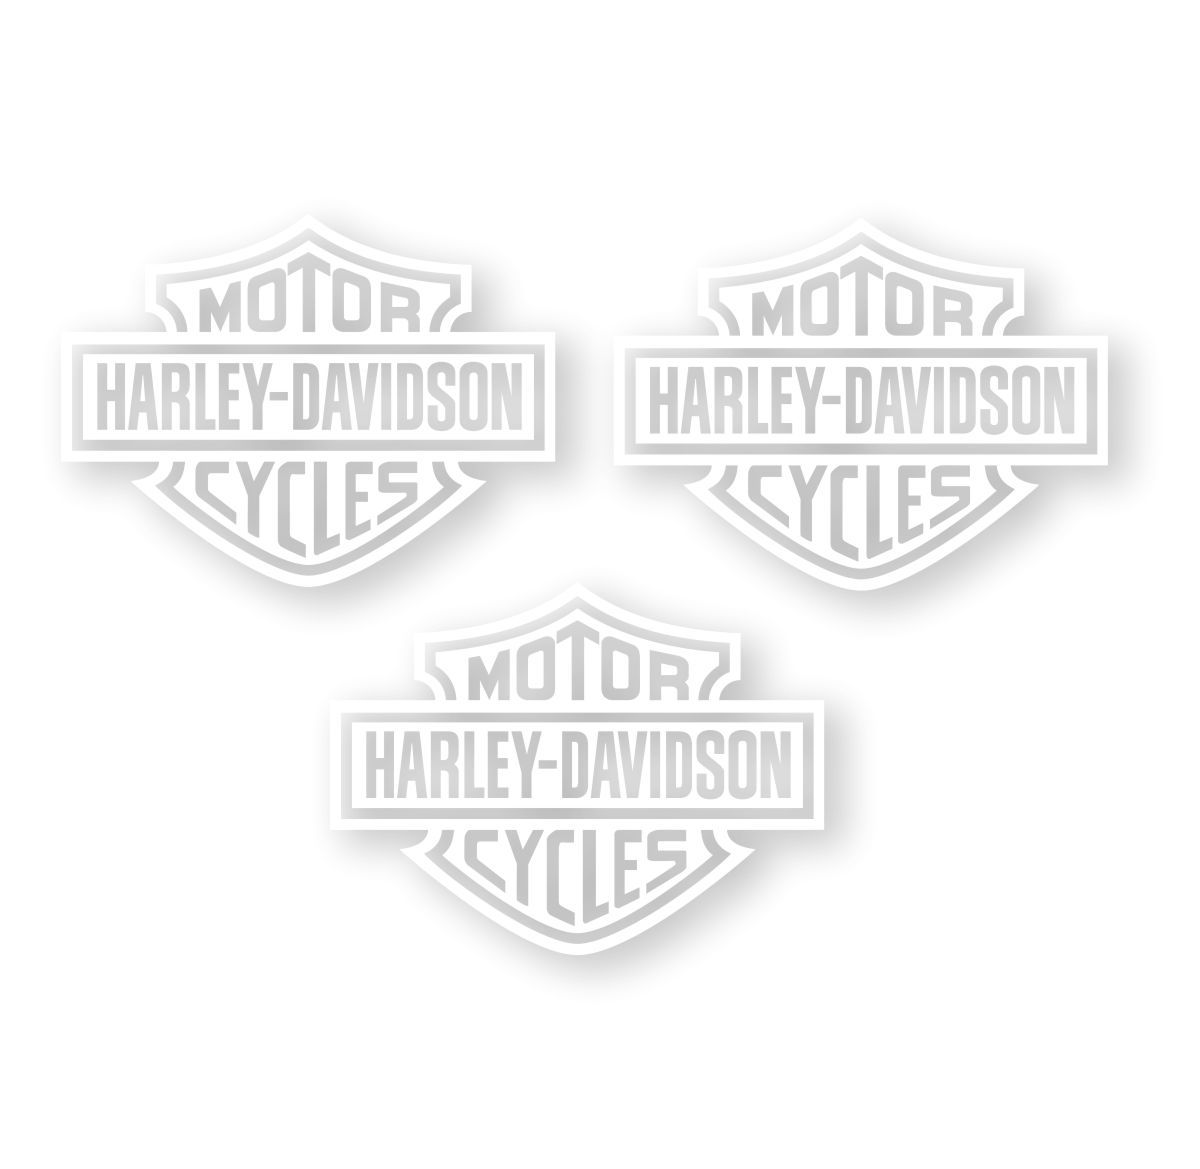 Kit com 3 Adesivos Harley Davidson - 10x7,5cm cada